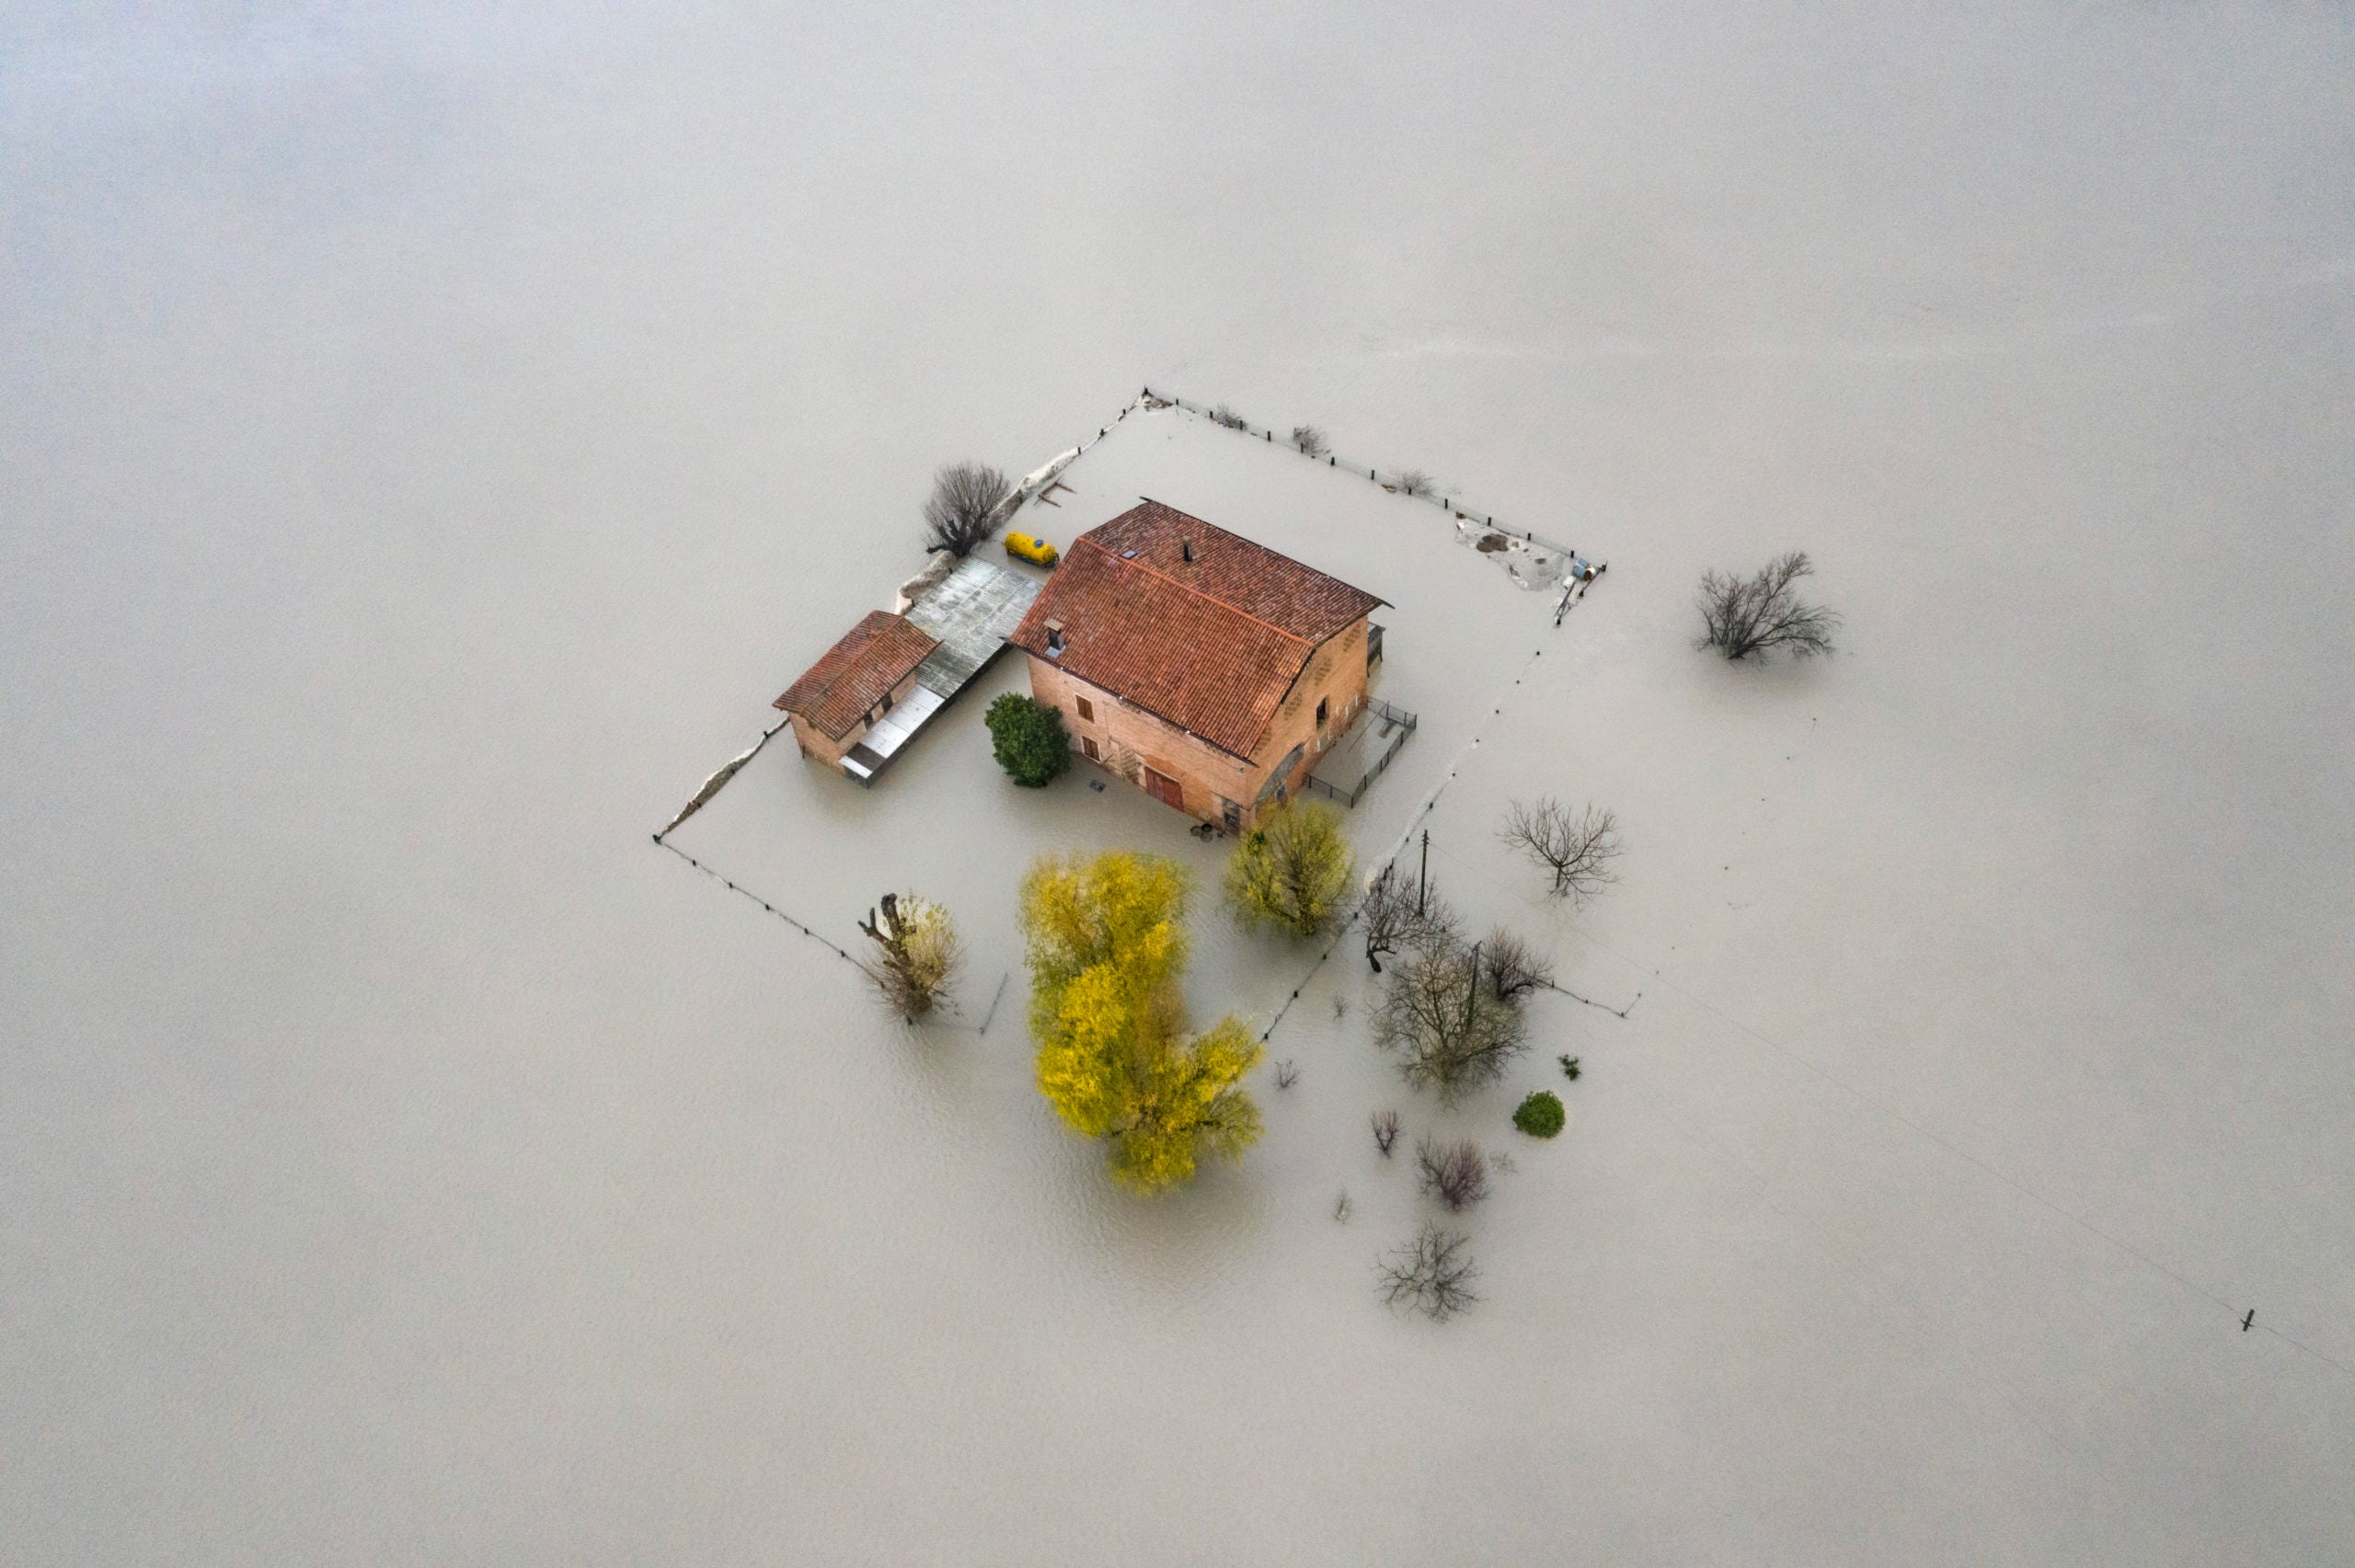 Title: "Ariel view of the Panaro riverâs flooding near Modena, Italy."